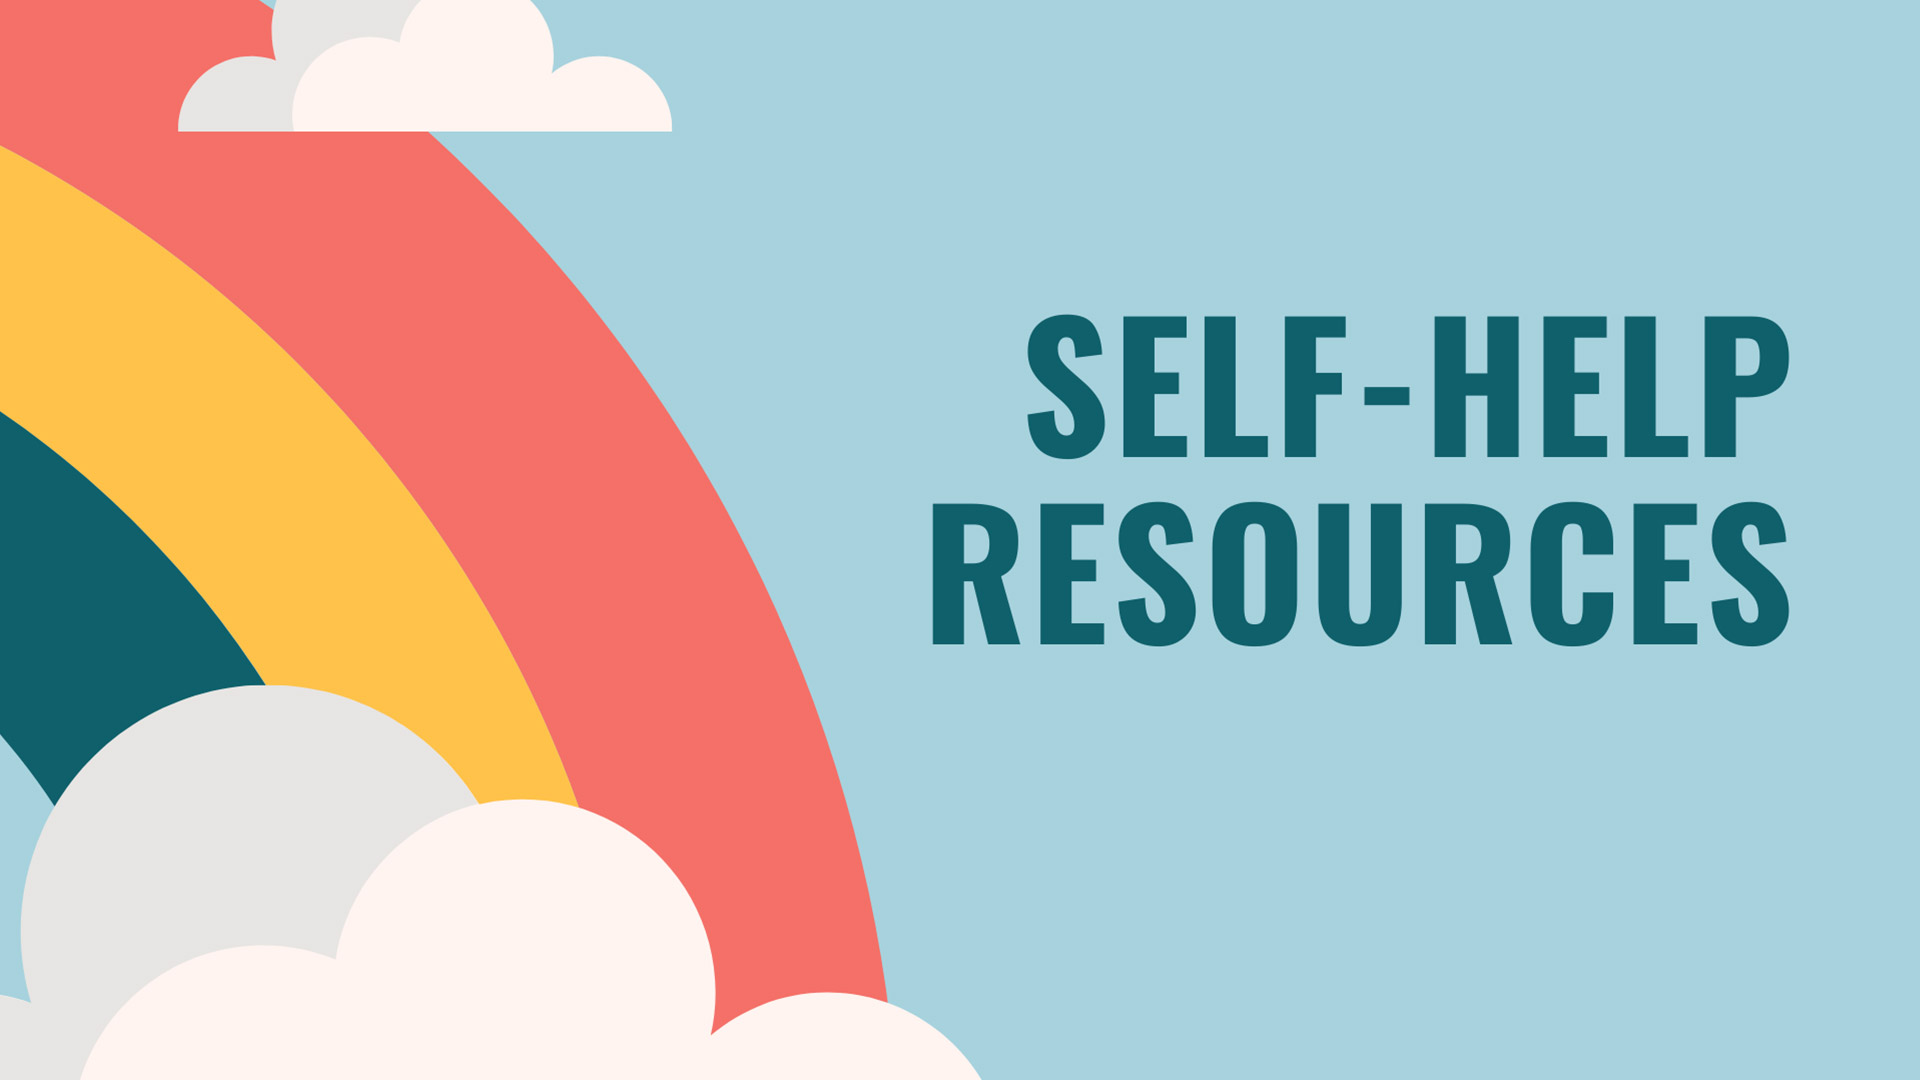 Self help resources